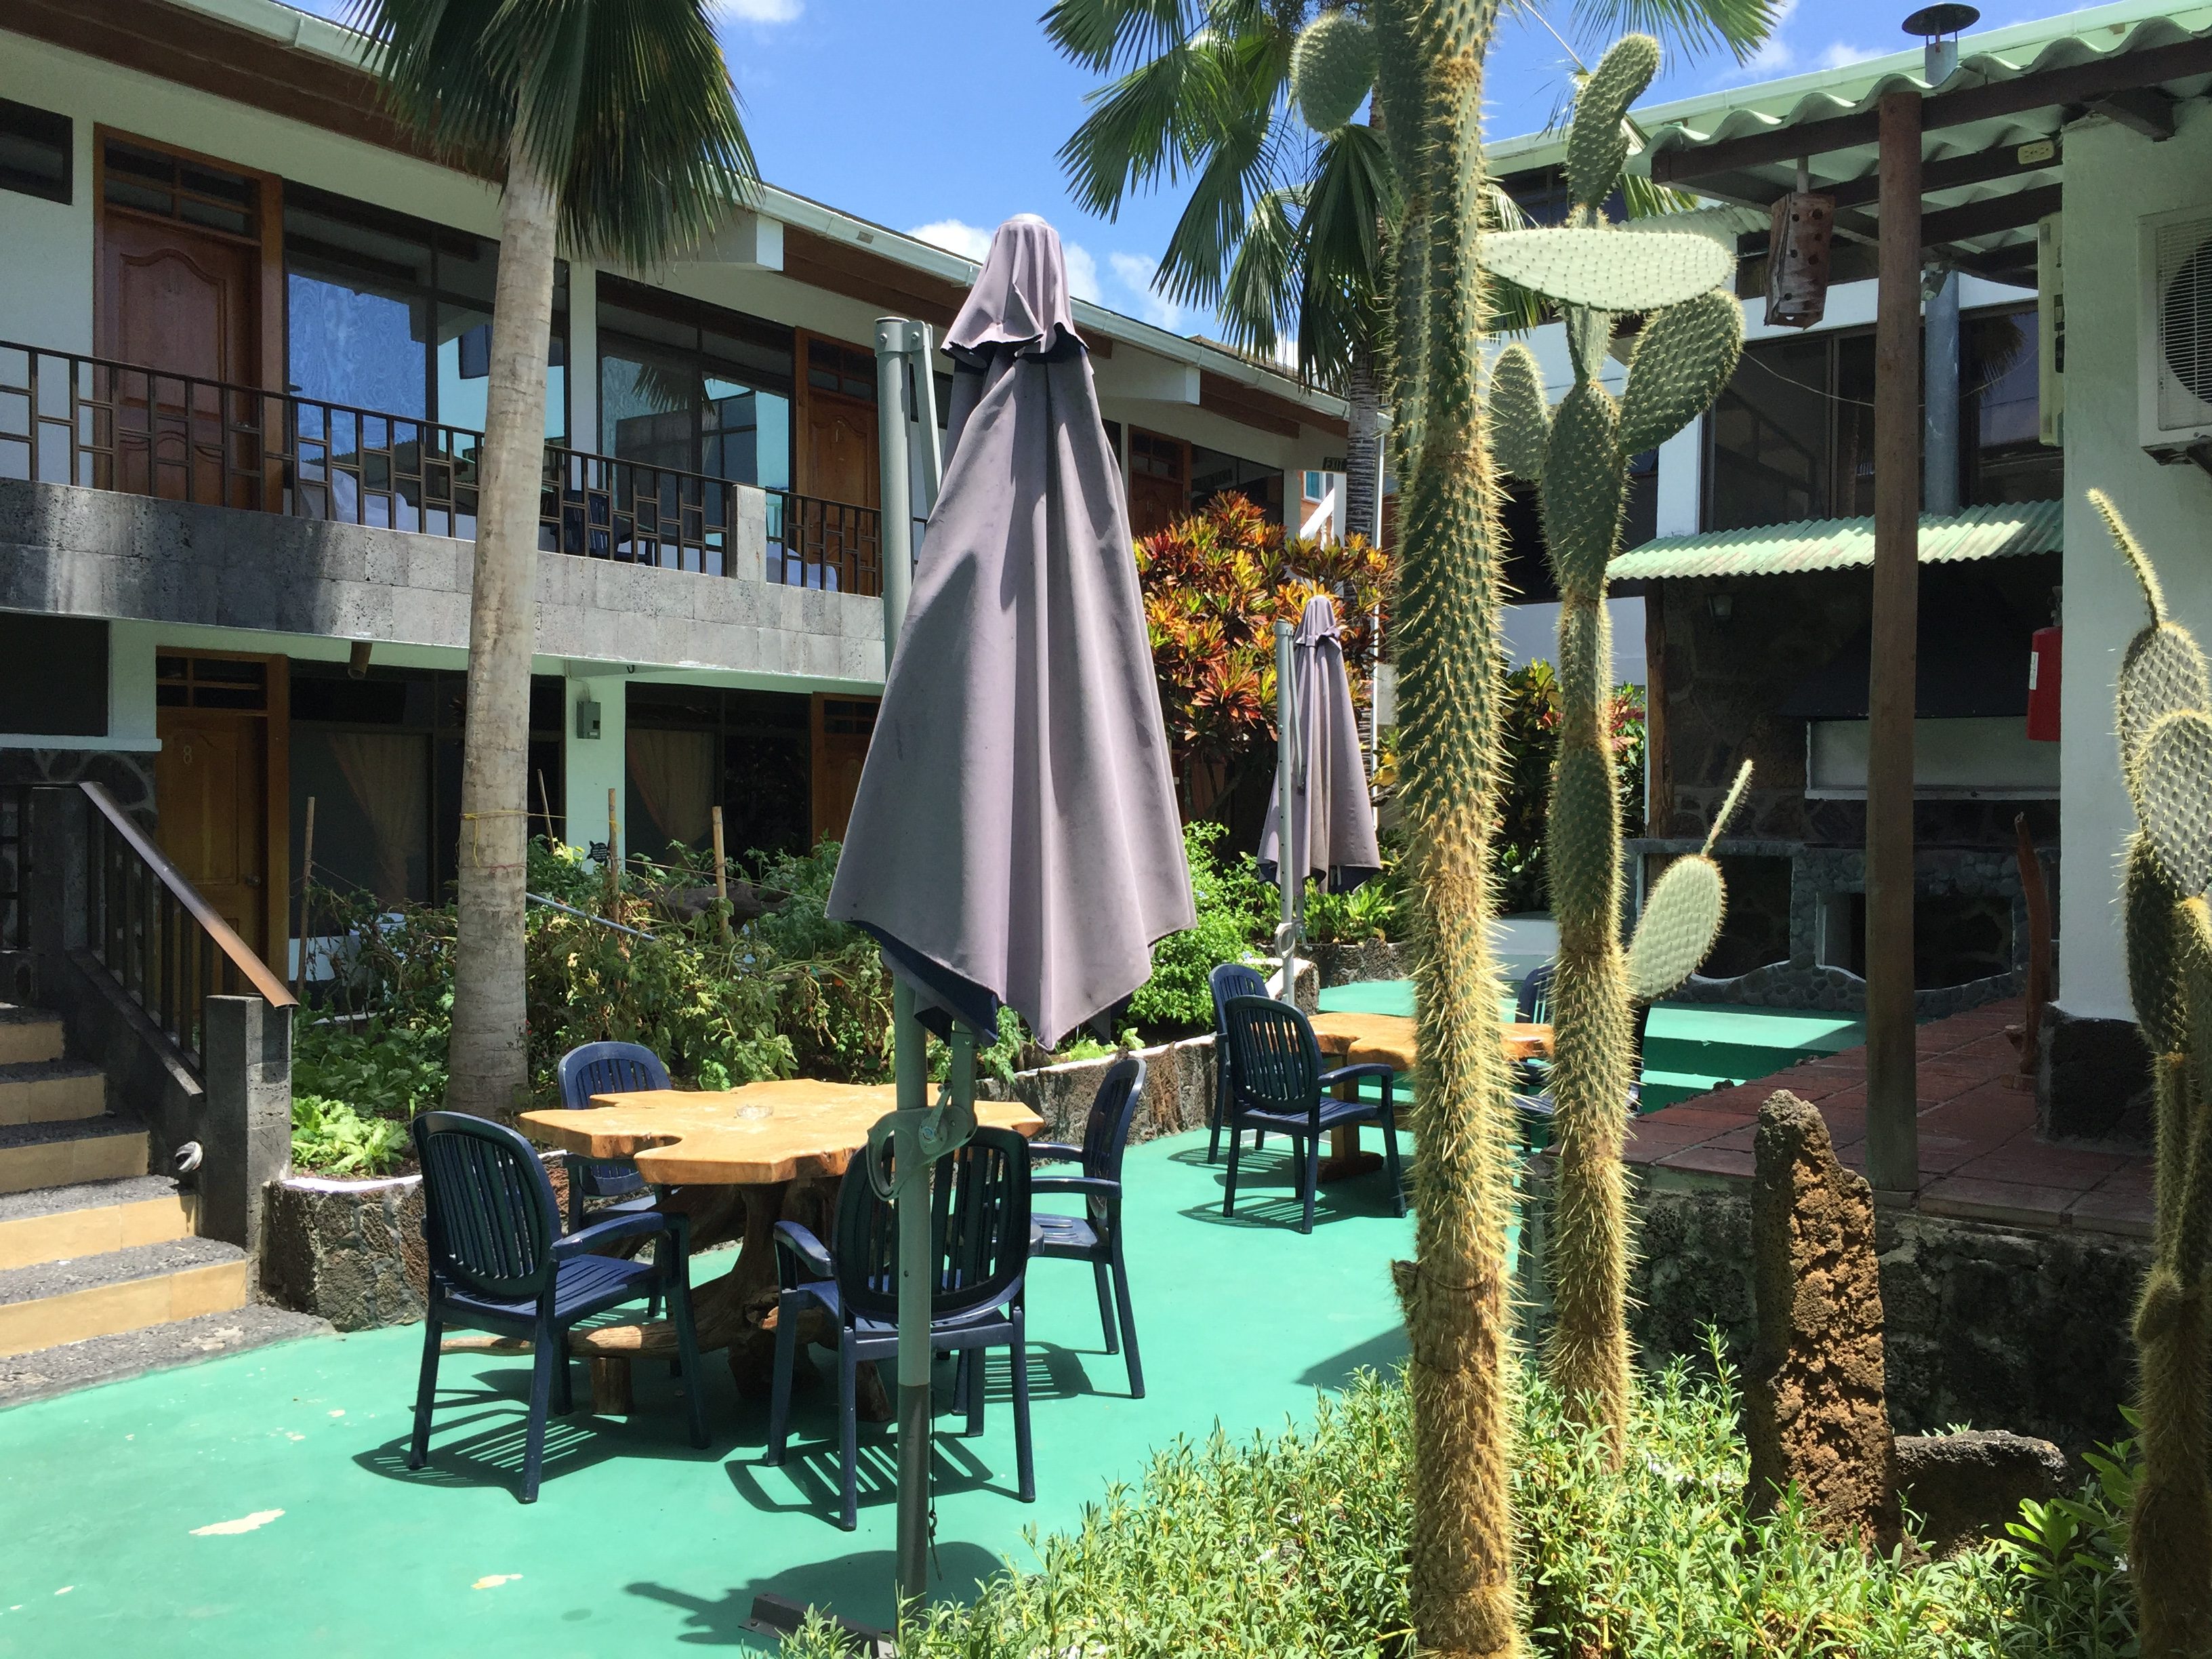 Hotel Fernandina in Puerto Ayora, Santa Cruz in the Galapagos Islands